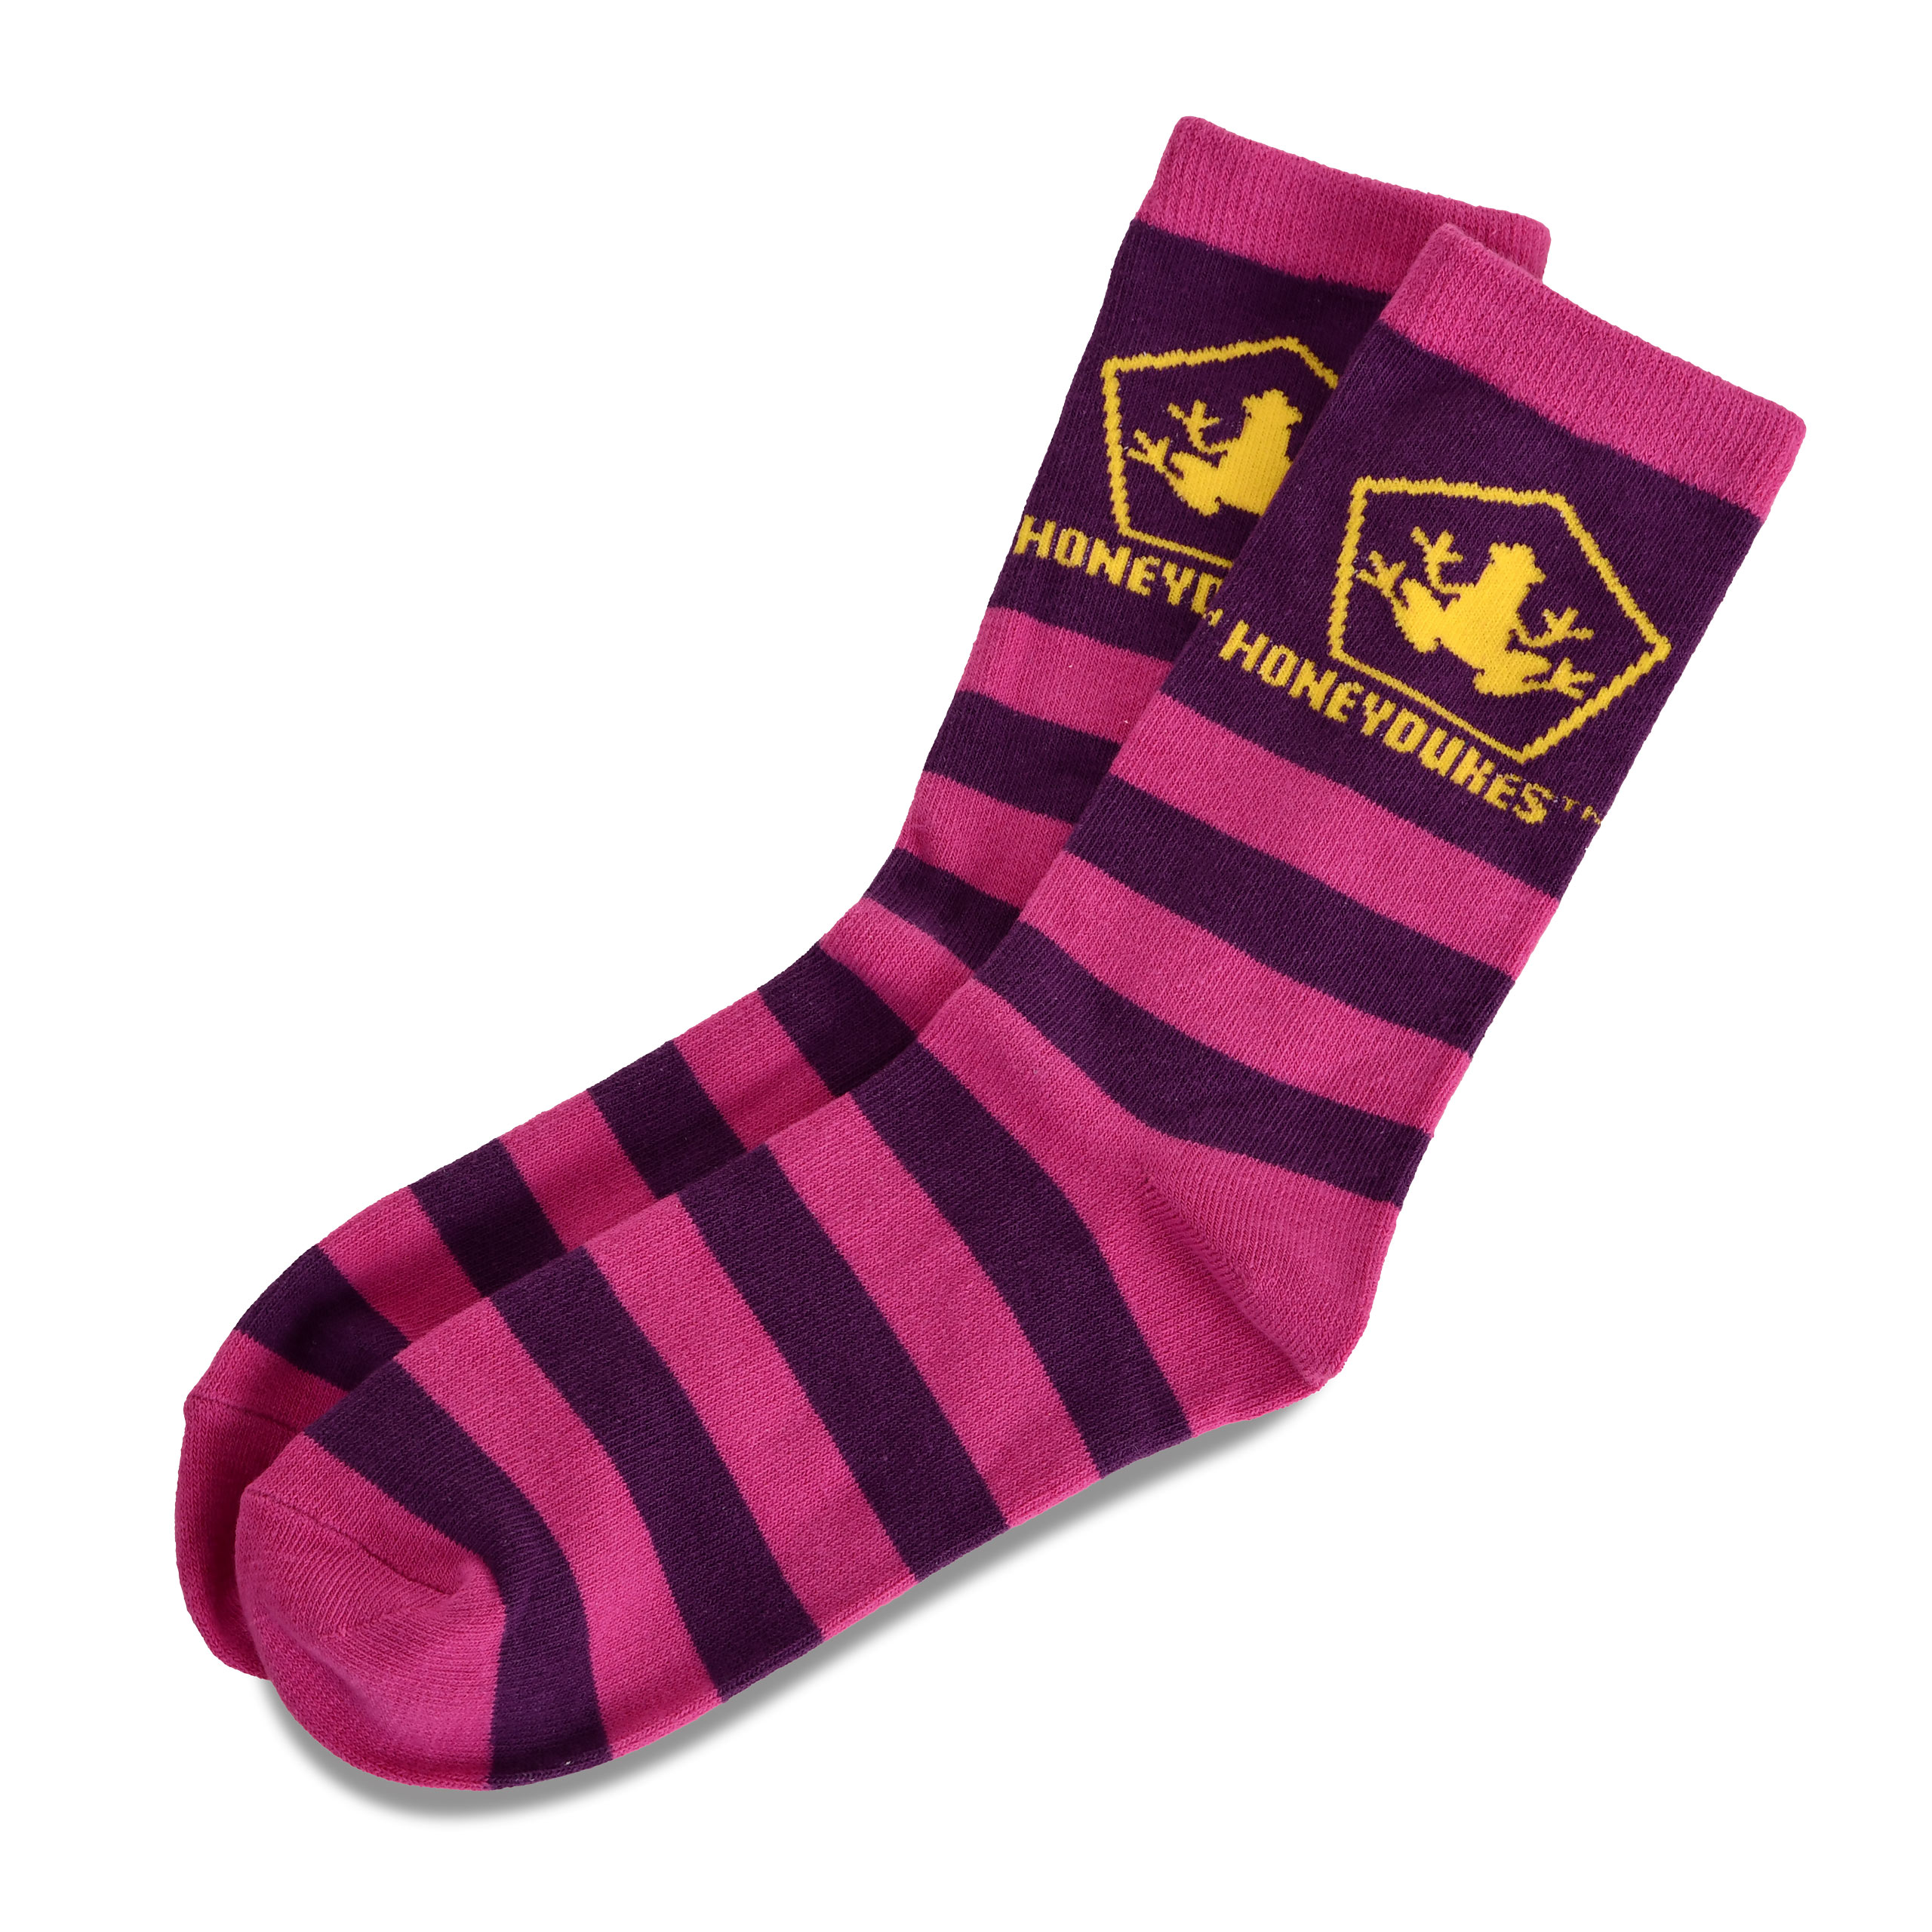 Harry Potter - Schokofrosch Socken